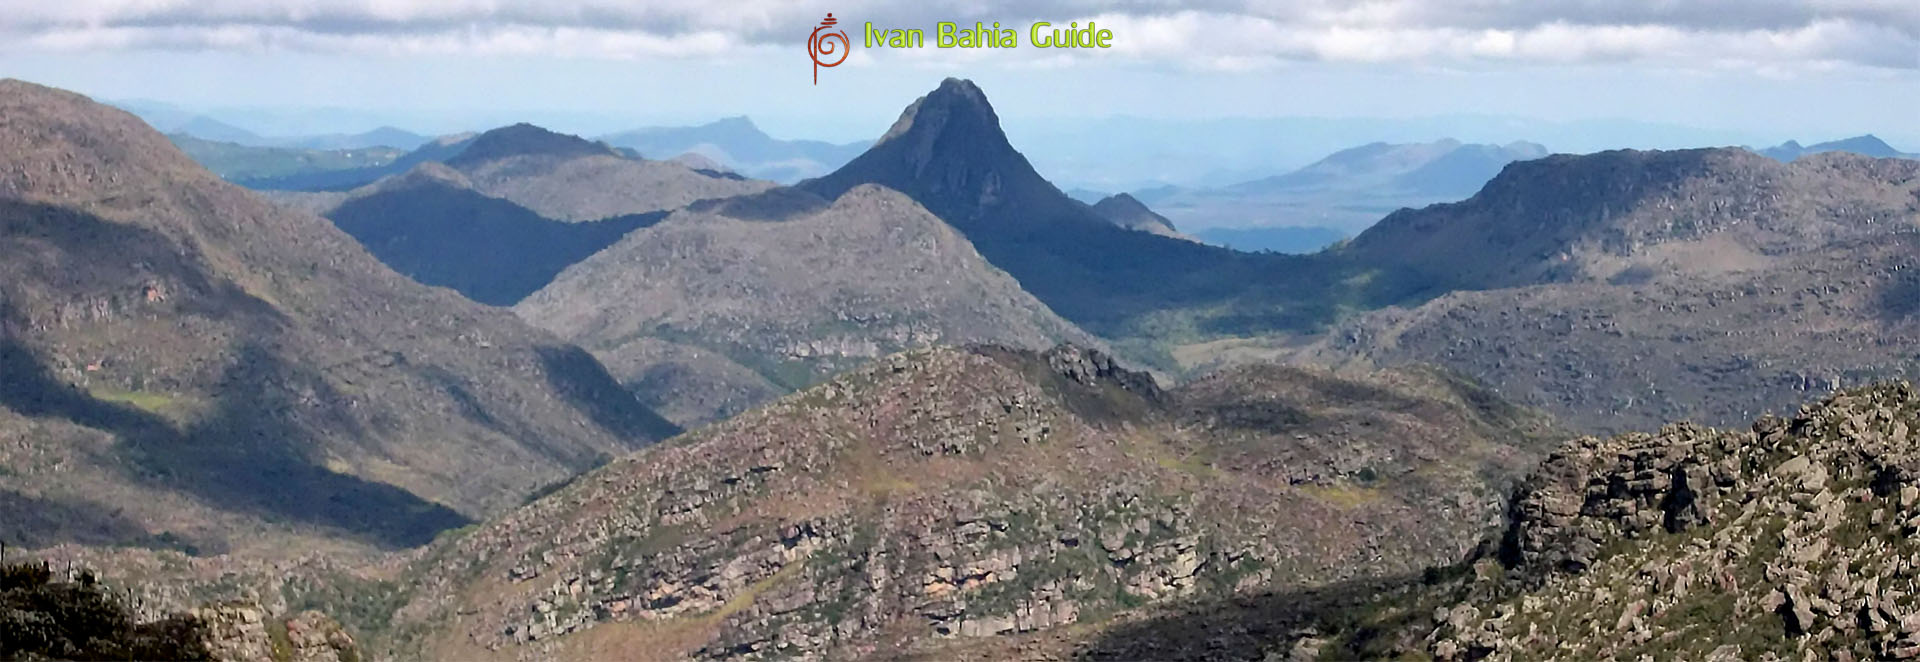 Ivan Bahia & Chapada Diamantina guide / on vous emmène au toit de Bahia à Chapada Diamantina Park national pour un trekking dos 3 picos, aux points les plus hauts du Nord-est/ Bahia (+2000m) avec les pics Barbado, Almas et Itobira / #ibtg #ibg #ivanbahiaguide #ivanbahiatravelguide #zenturturismo #ivanchapadadiamantinaguide #valedopati #patyvalley #pati #viapati #valecapao #ivanchapadaguide #chapadadiamantinatransfer #chapadatrekking #chapadaroots #chapadasoul #lencoisbahia #chapadadiamantinatrekking #ivanchapadadiamantinaguide  #chapadadiamantinaguide  #guidechapadadiamantina #lencois #lençois #chapadaadventuredaniel #diamondmountains #zentur # #guiachapadadiamantina #chapadaaventure #discoverchapada #chapadadiamond #chapadasoul #diamantinatrip  #tripadvisor #bahiametisse, #fernandobingre, #ivansalvadorbahia #salvadorbahiaTravel #toursbylocals #fotosbahia #bahiafotos #chapadadiamantinanationalpark #yourtoursbrazil #maurotours #bahiatopturismo #bahiapremium #maisbahiaturismo #fernandobingretourguide #cassiturismo 
